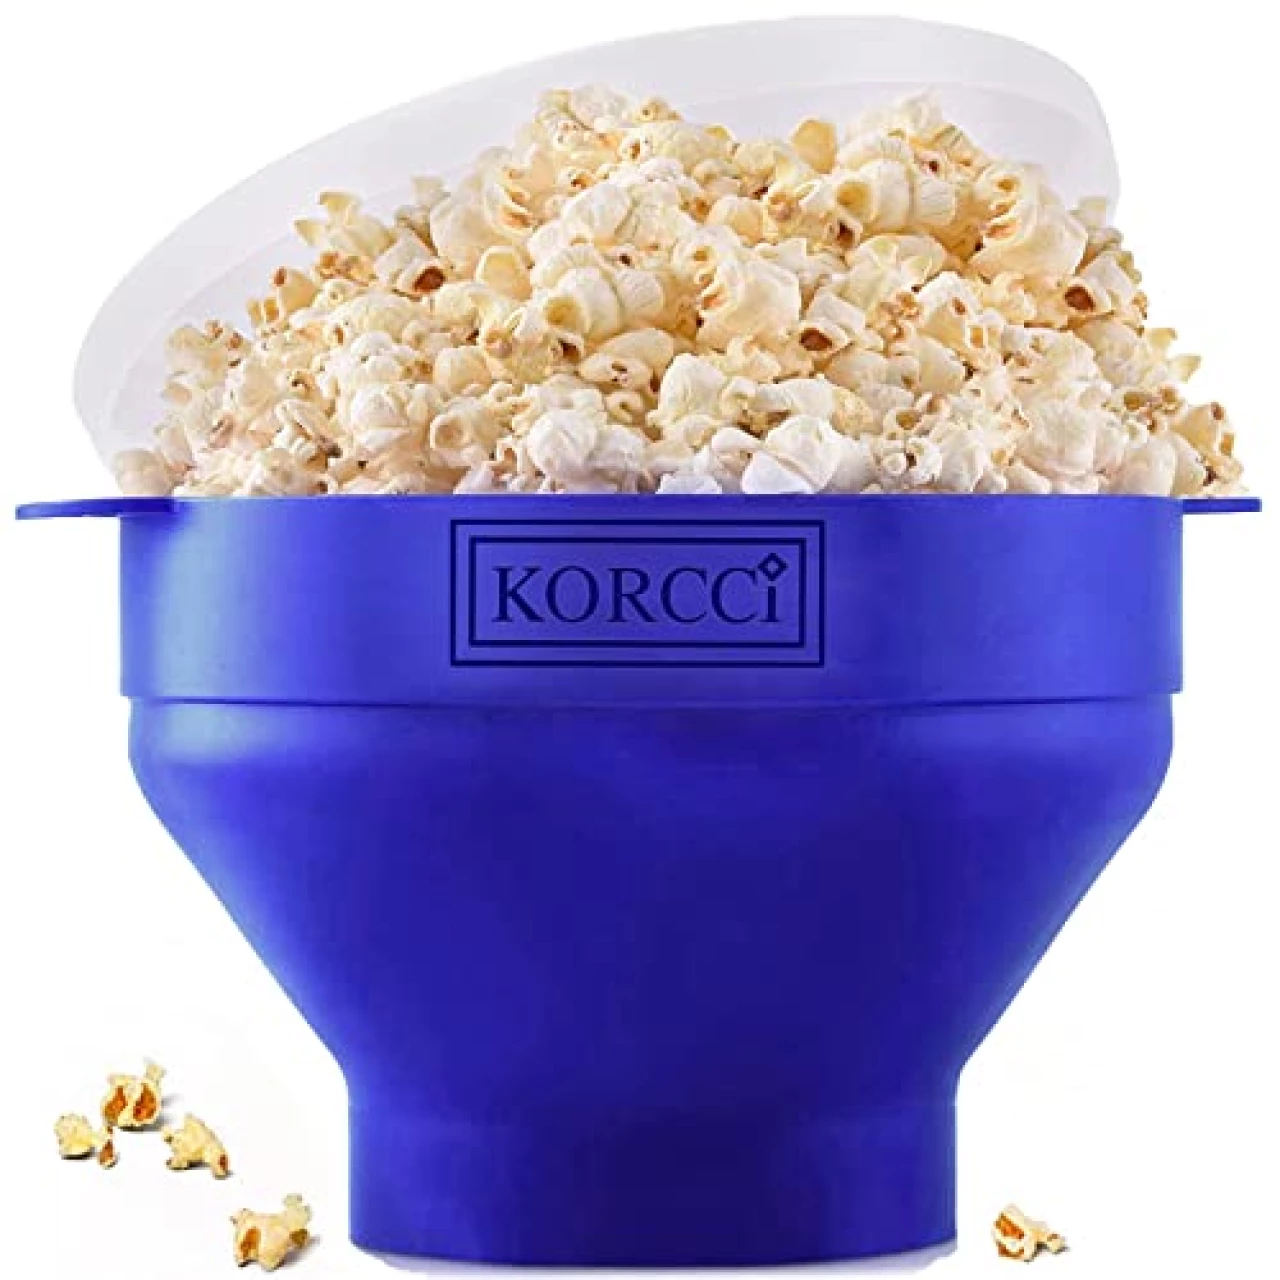 The Original Korcci Microwaveable Silicone Popcorn Popper, BPA Free Microwave Popcorn Popper, Collapsible Microwave Popcorn Maker Bowl, Dishwasher Safe - Blue